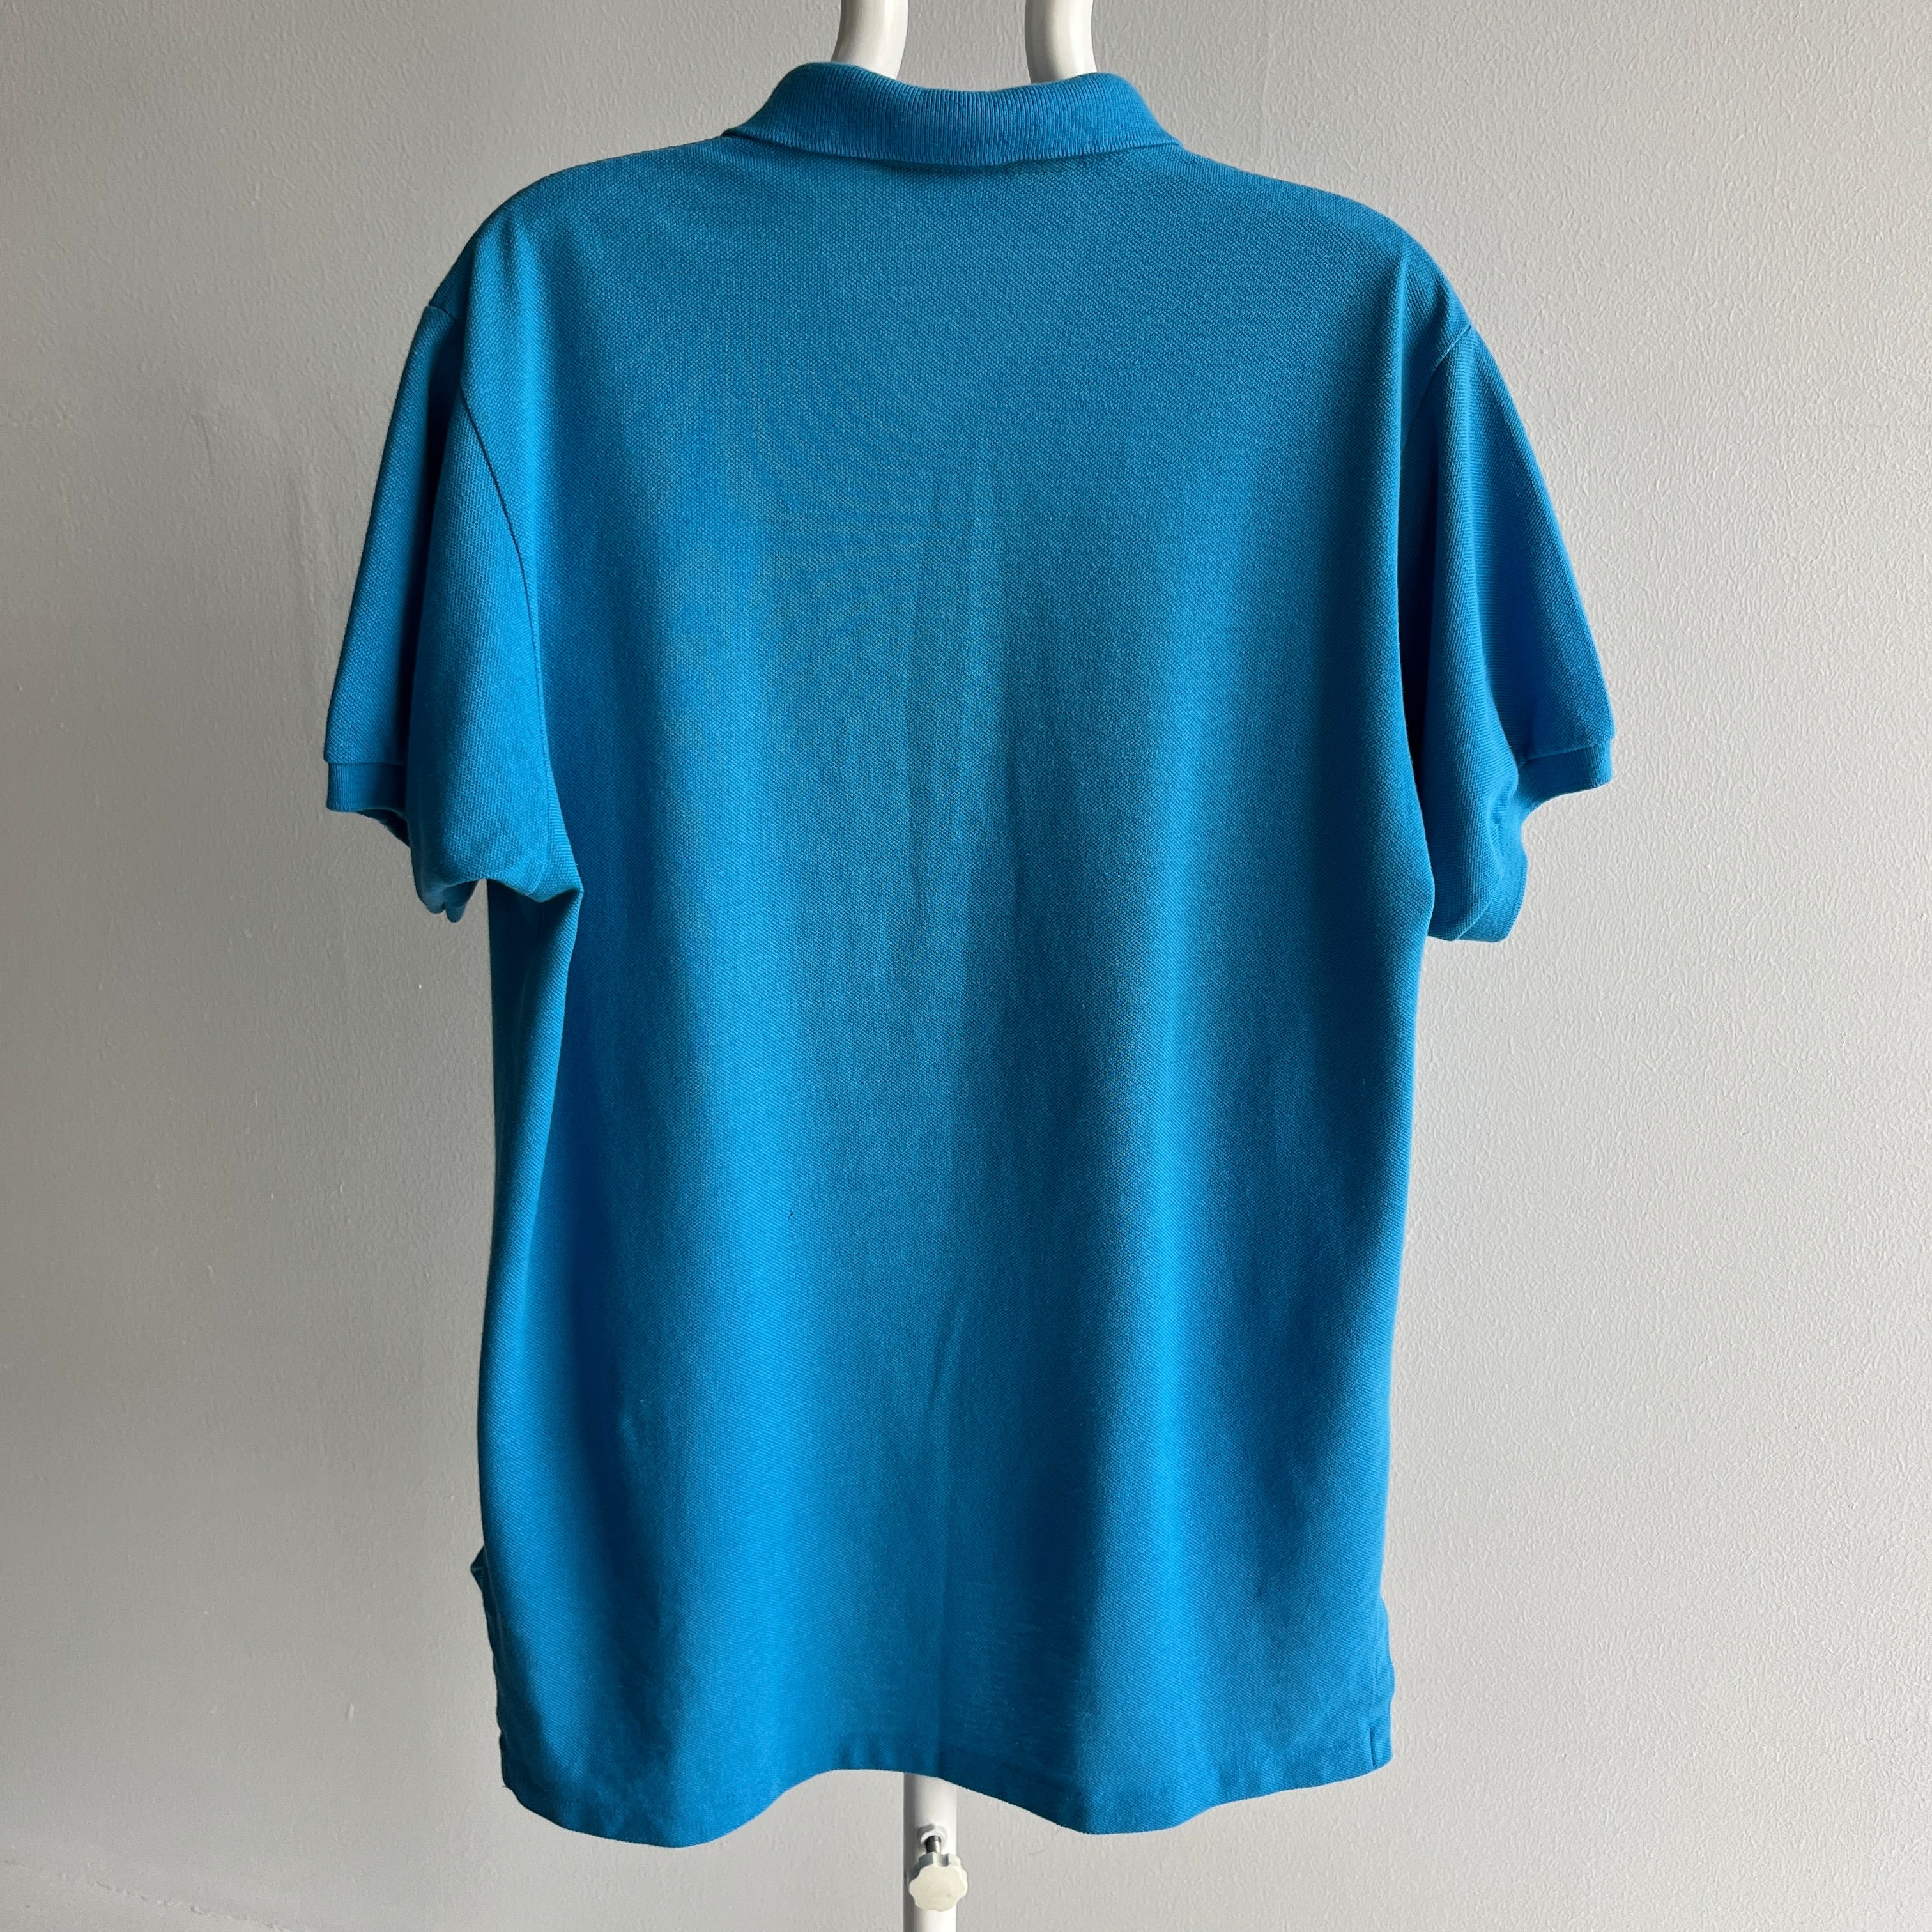 1980s USA Made Land's End Turquoise Polo Shirt